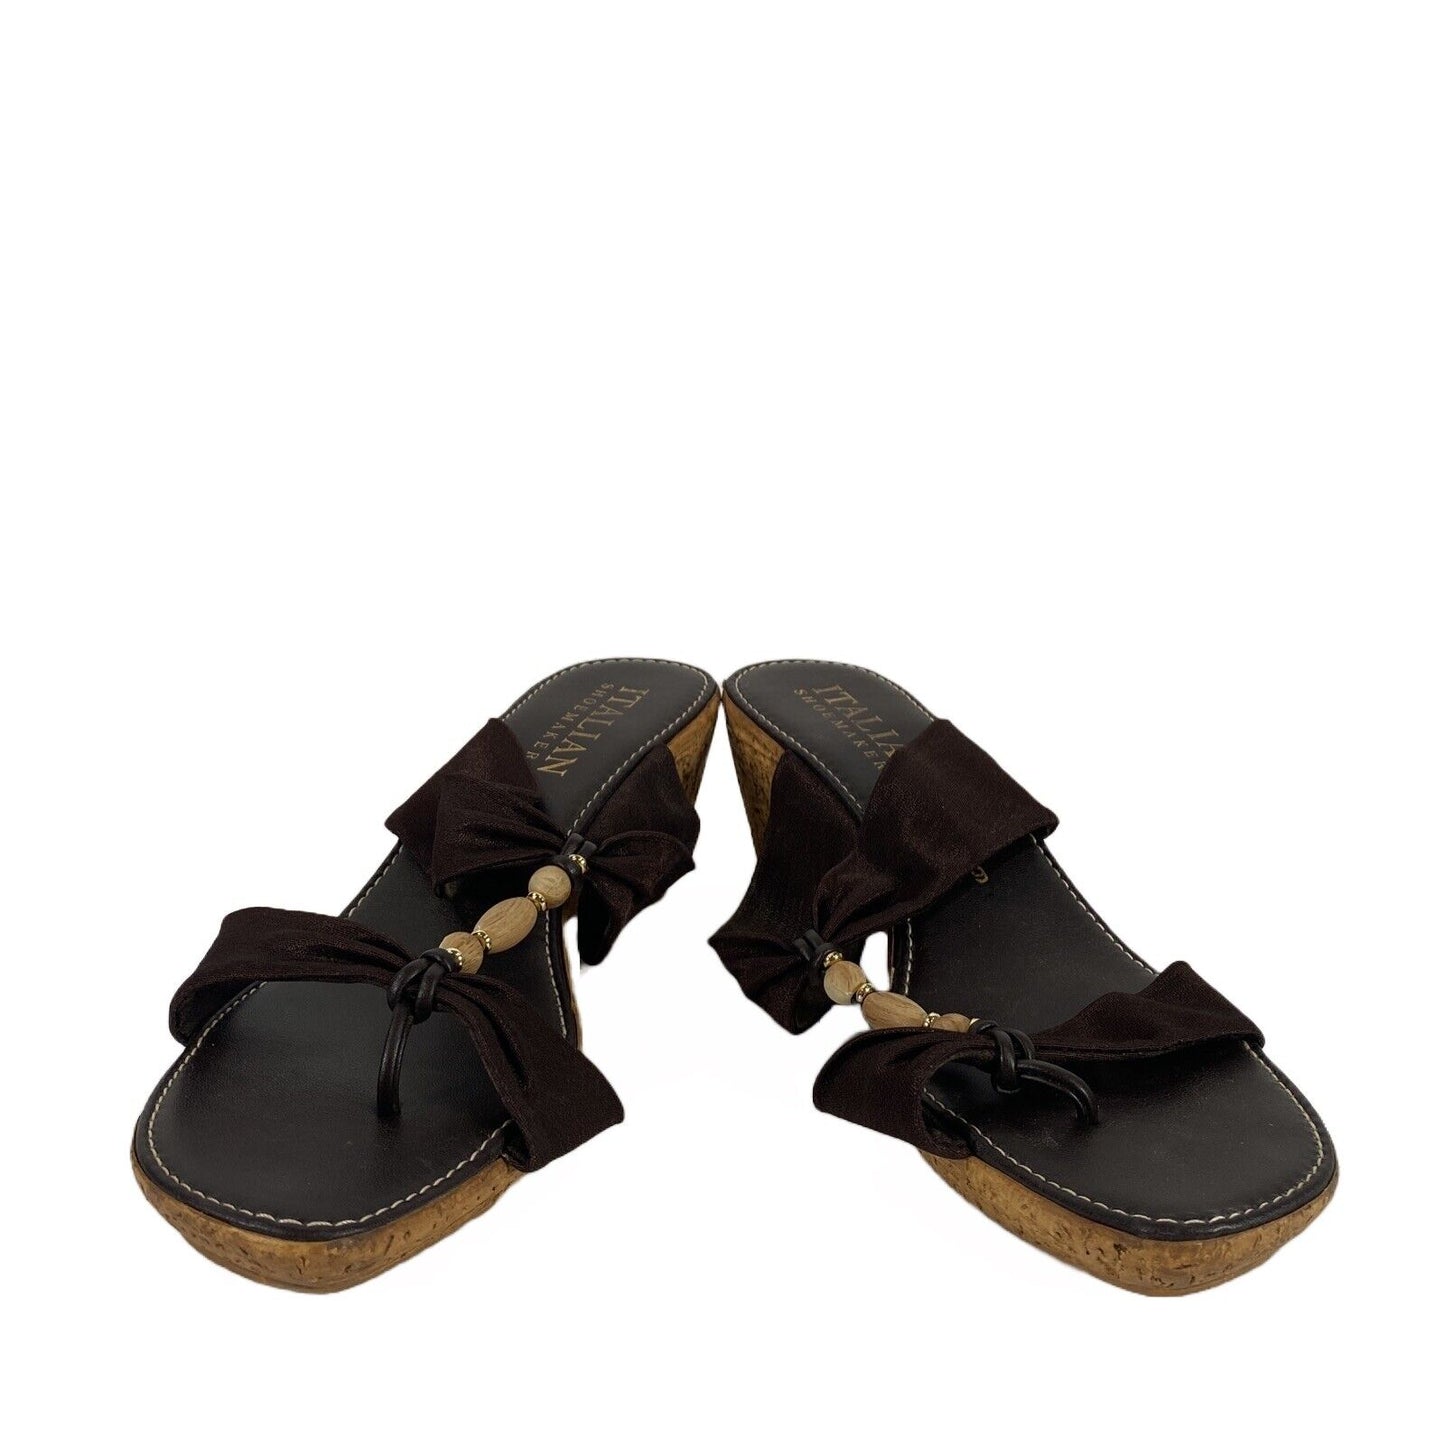 Italian Shoemakers Women's Brown Fabric Beaded Cork Wedge Sandals - 9